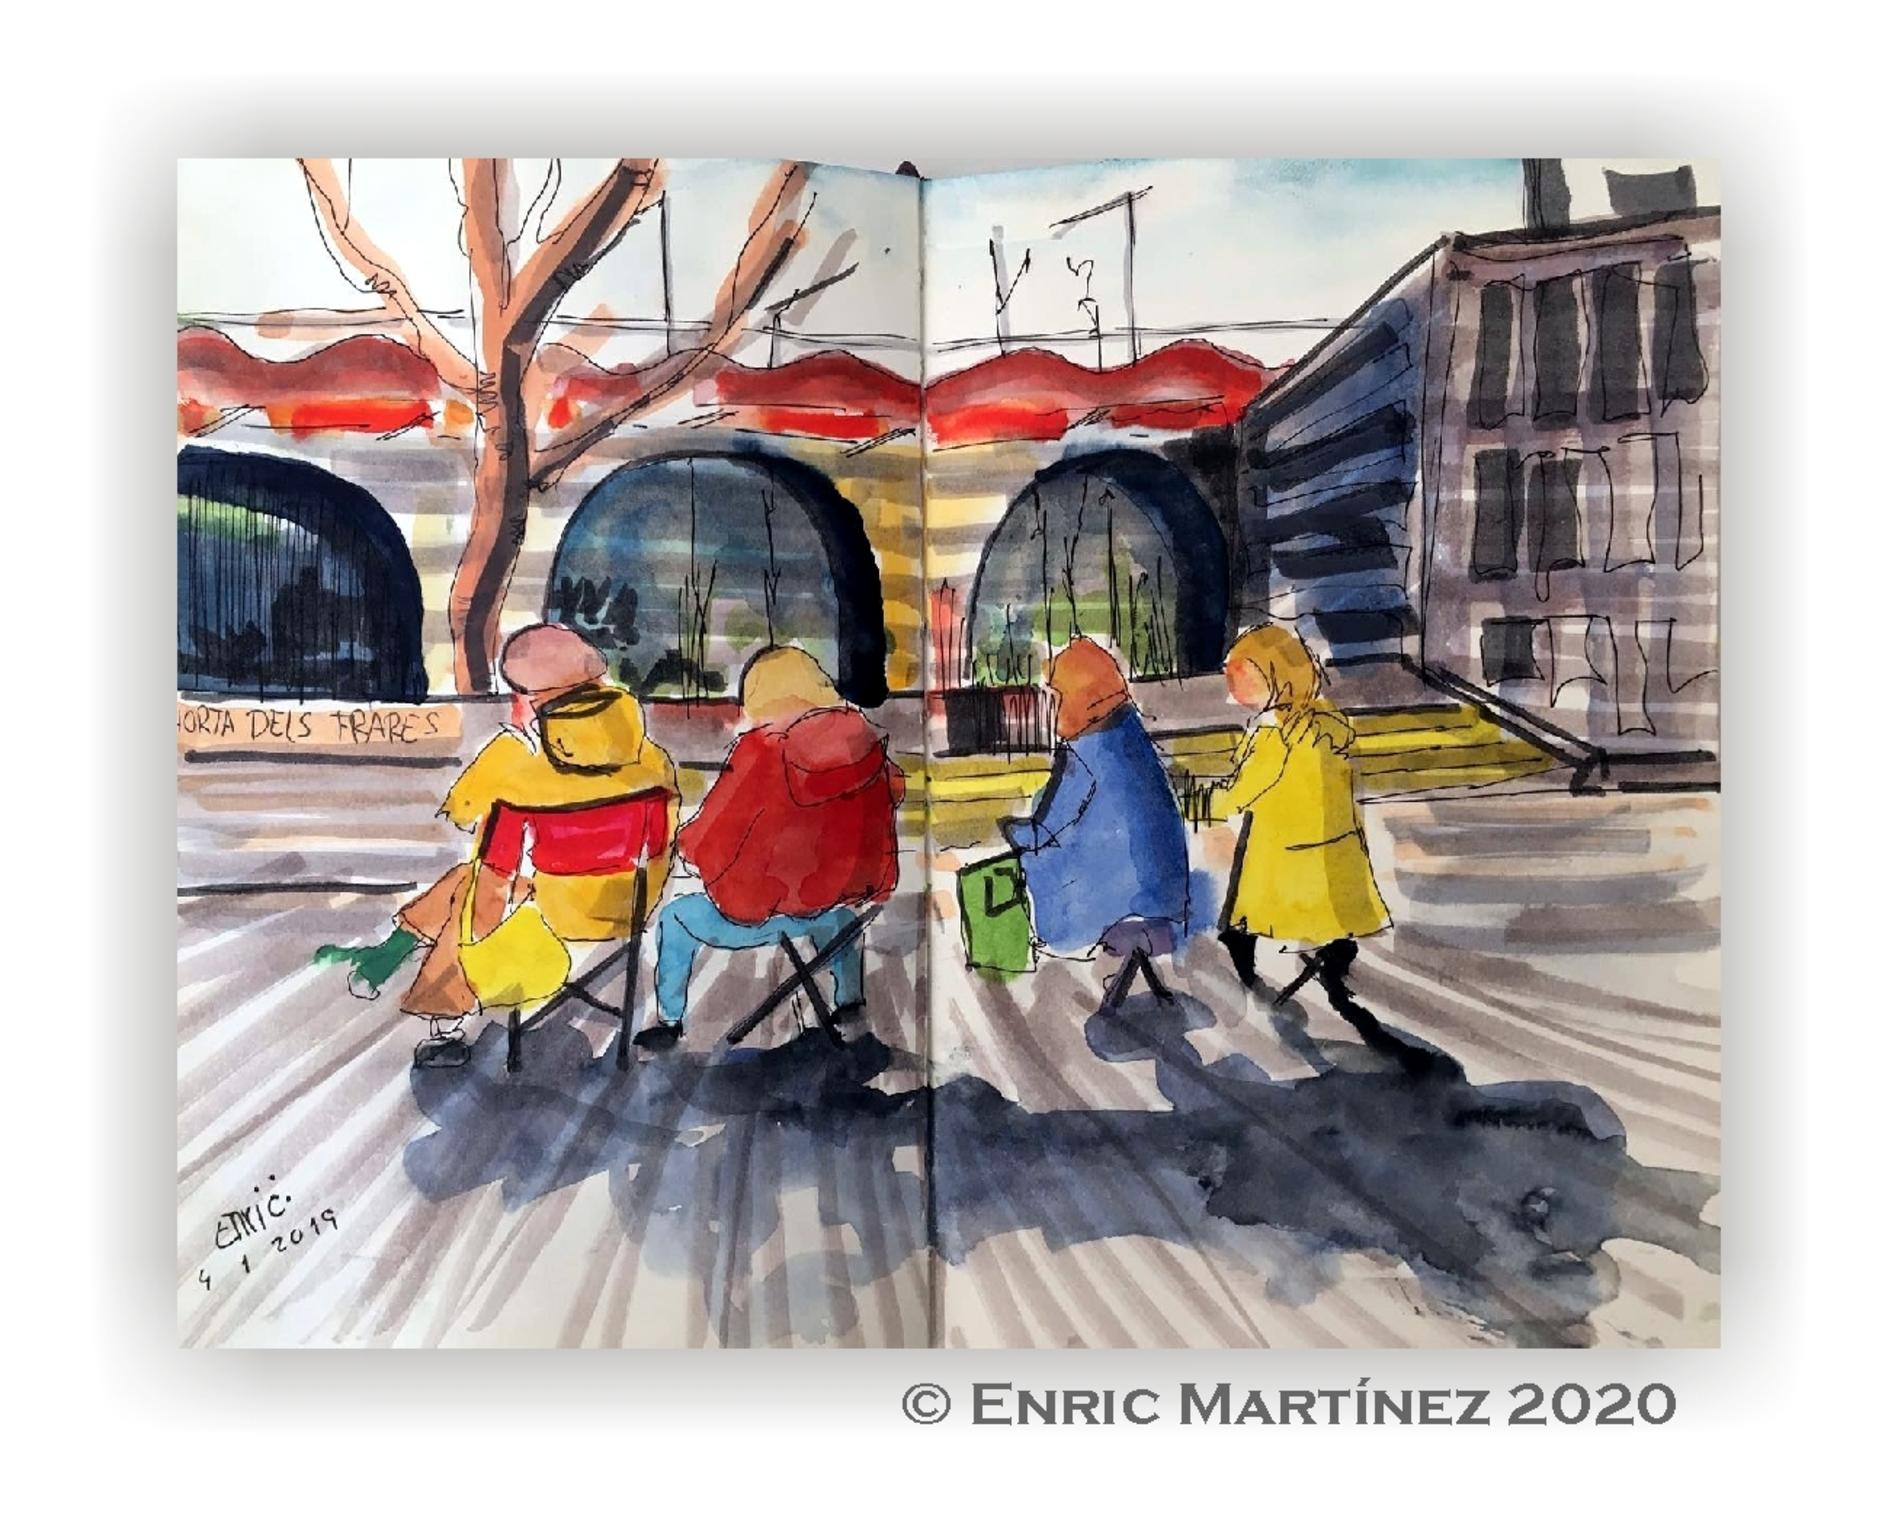  Enric Martnez 2020